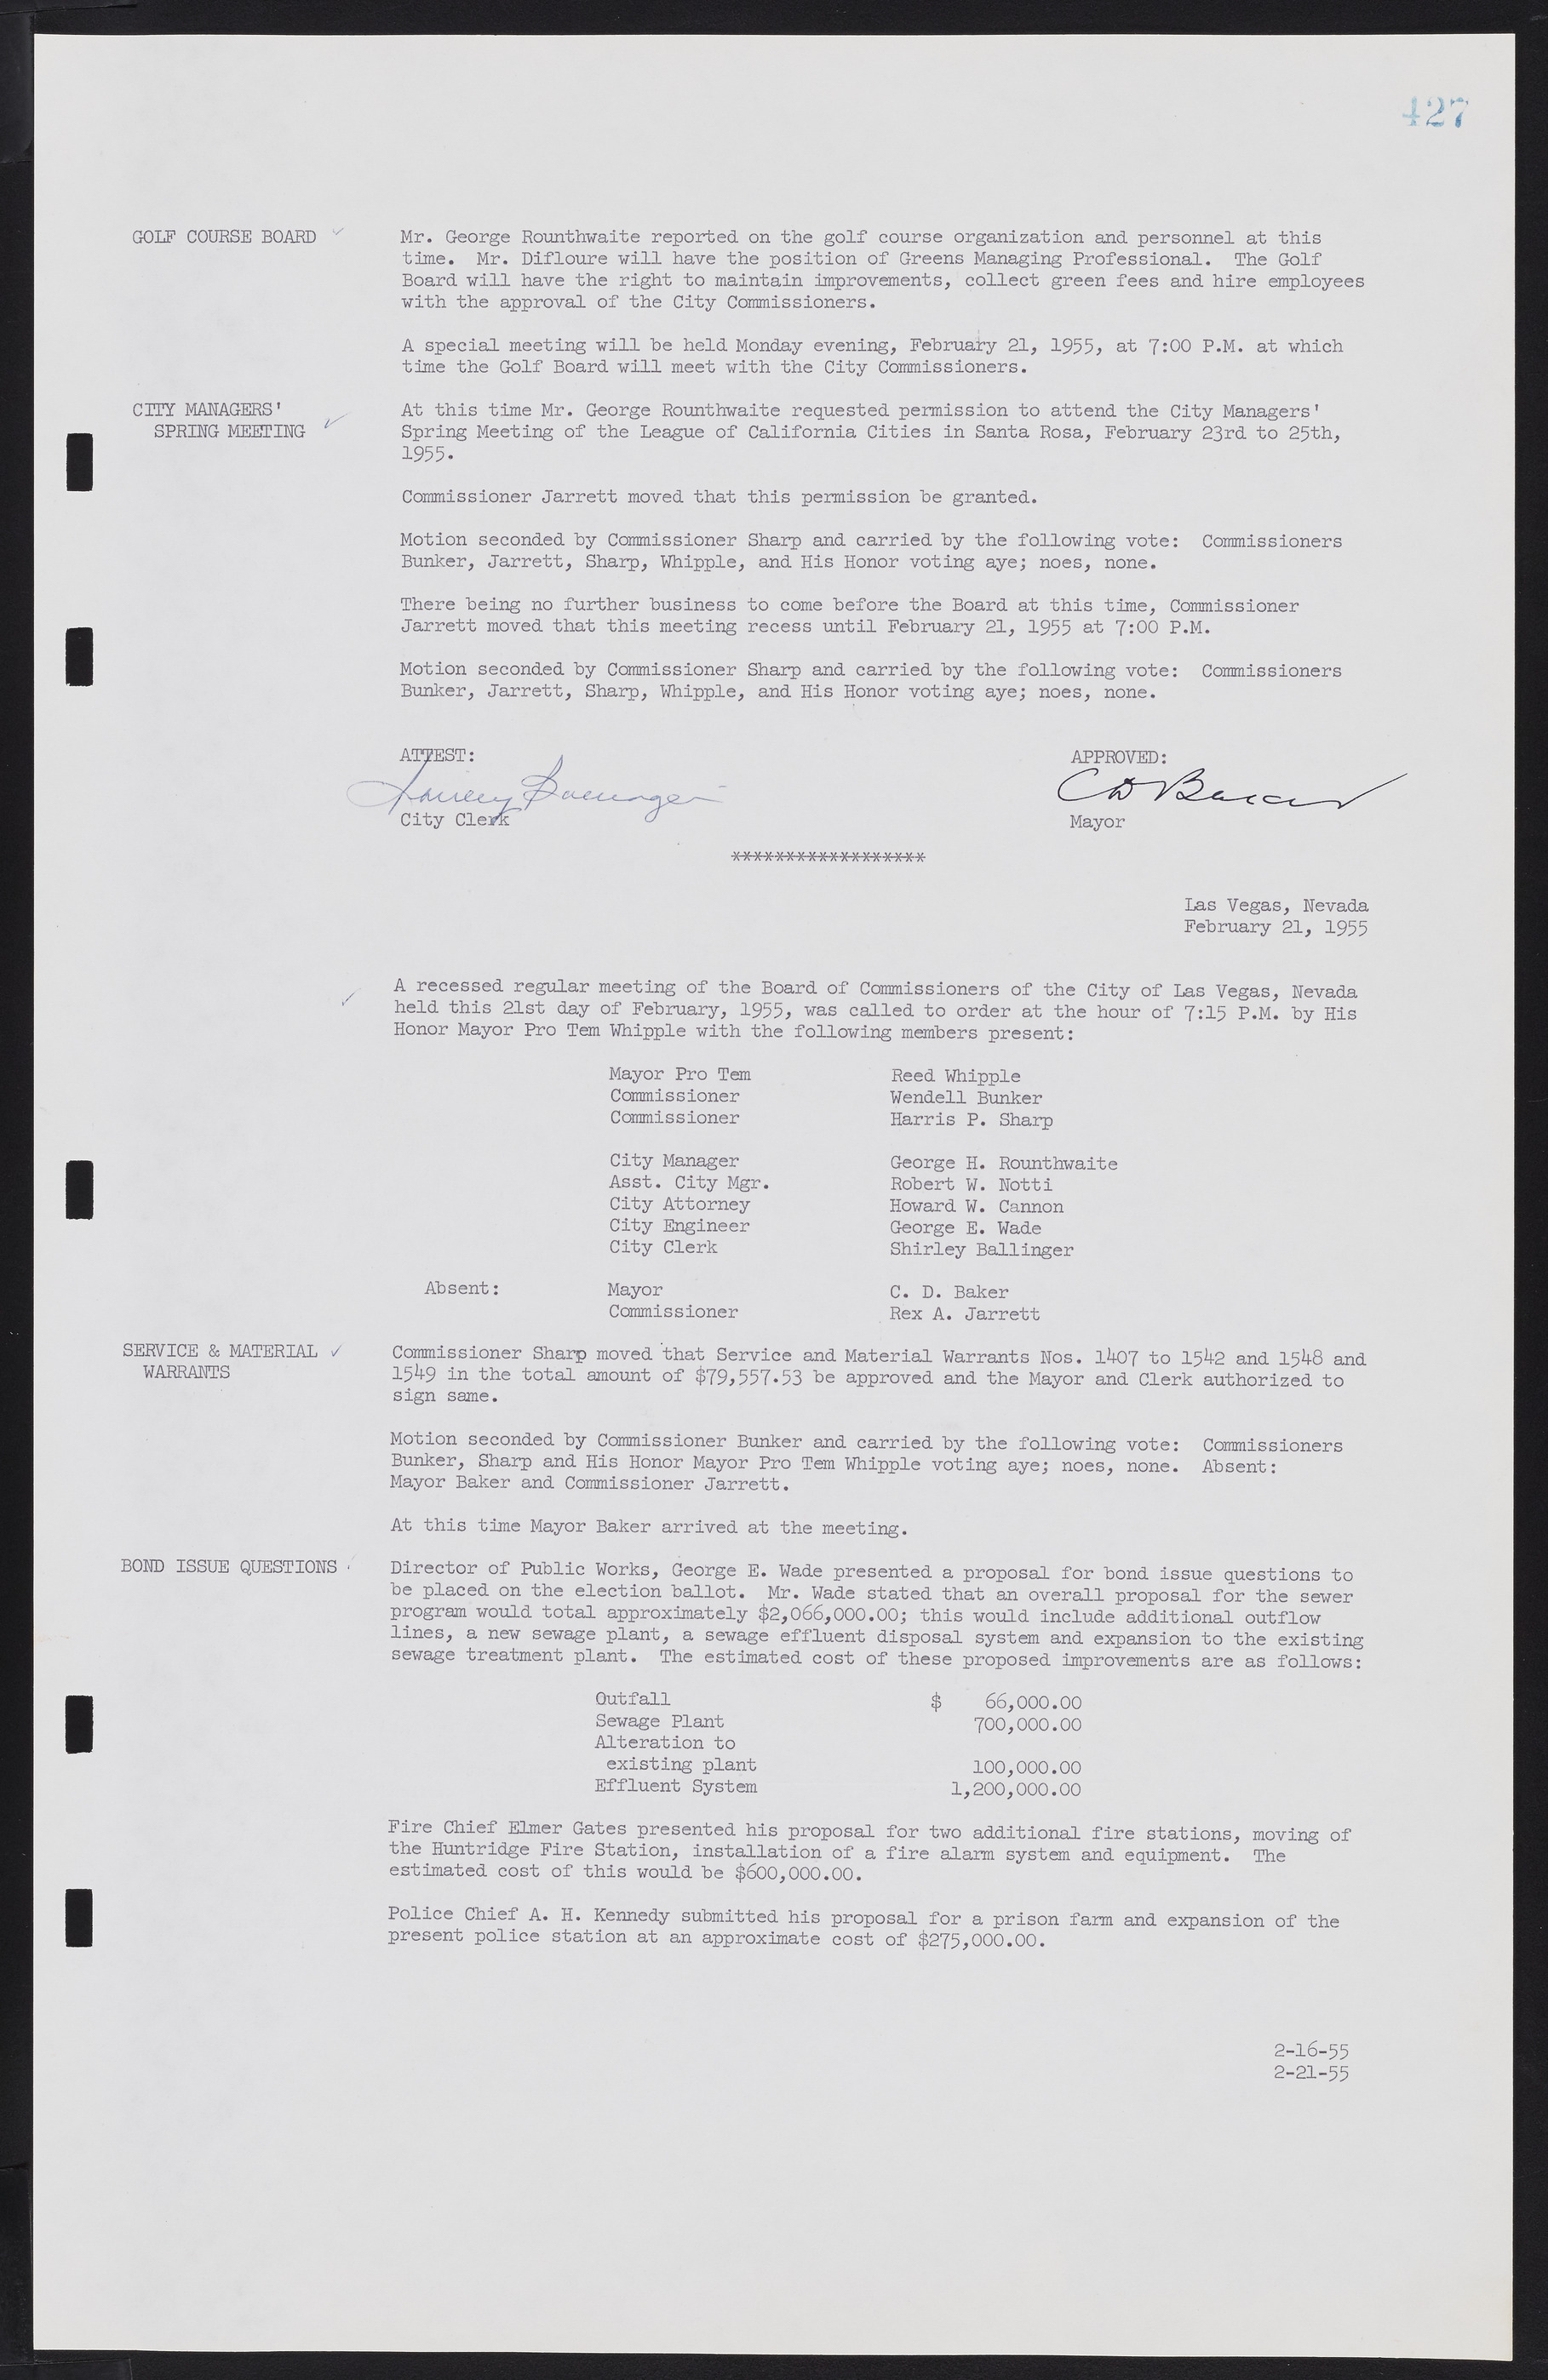 Las Vegas City Commission Minutes, February 17, 1954 to September 21, 1955, lvc000009-433